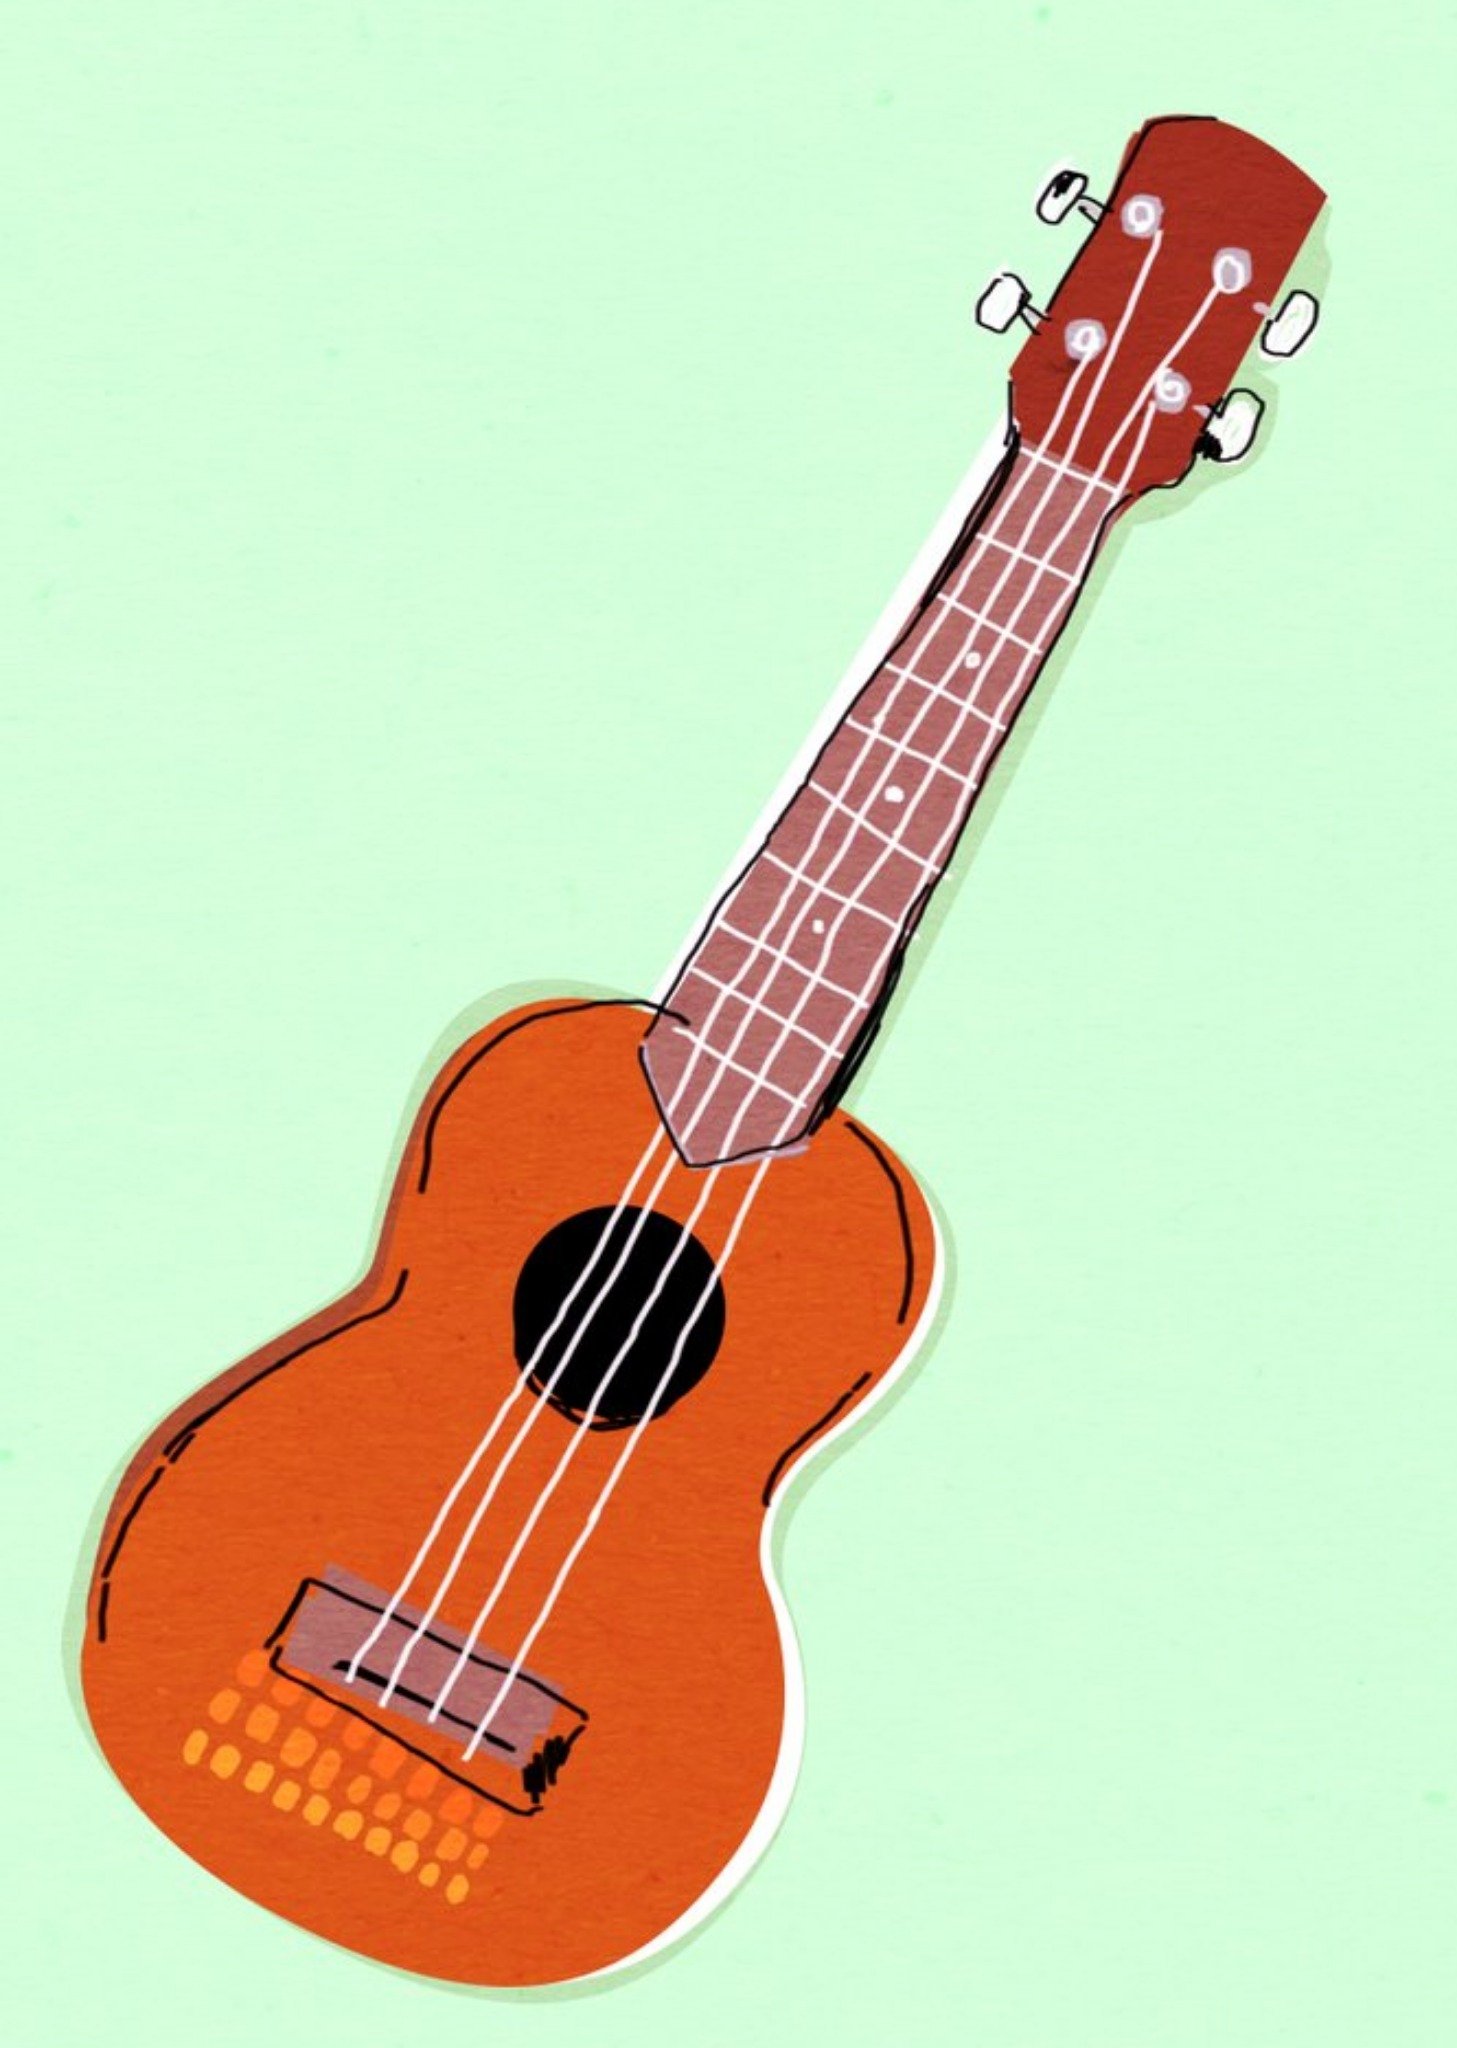 Moonpig Mint Green And Classic Guitar Illustration Card Ecard